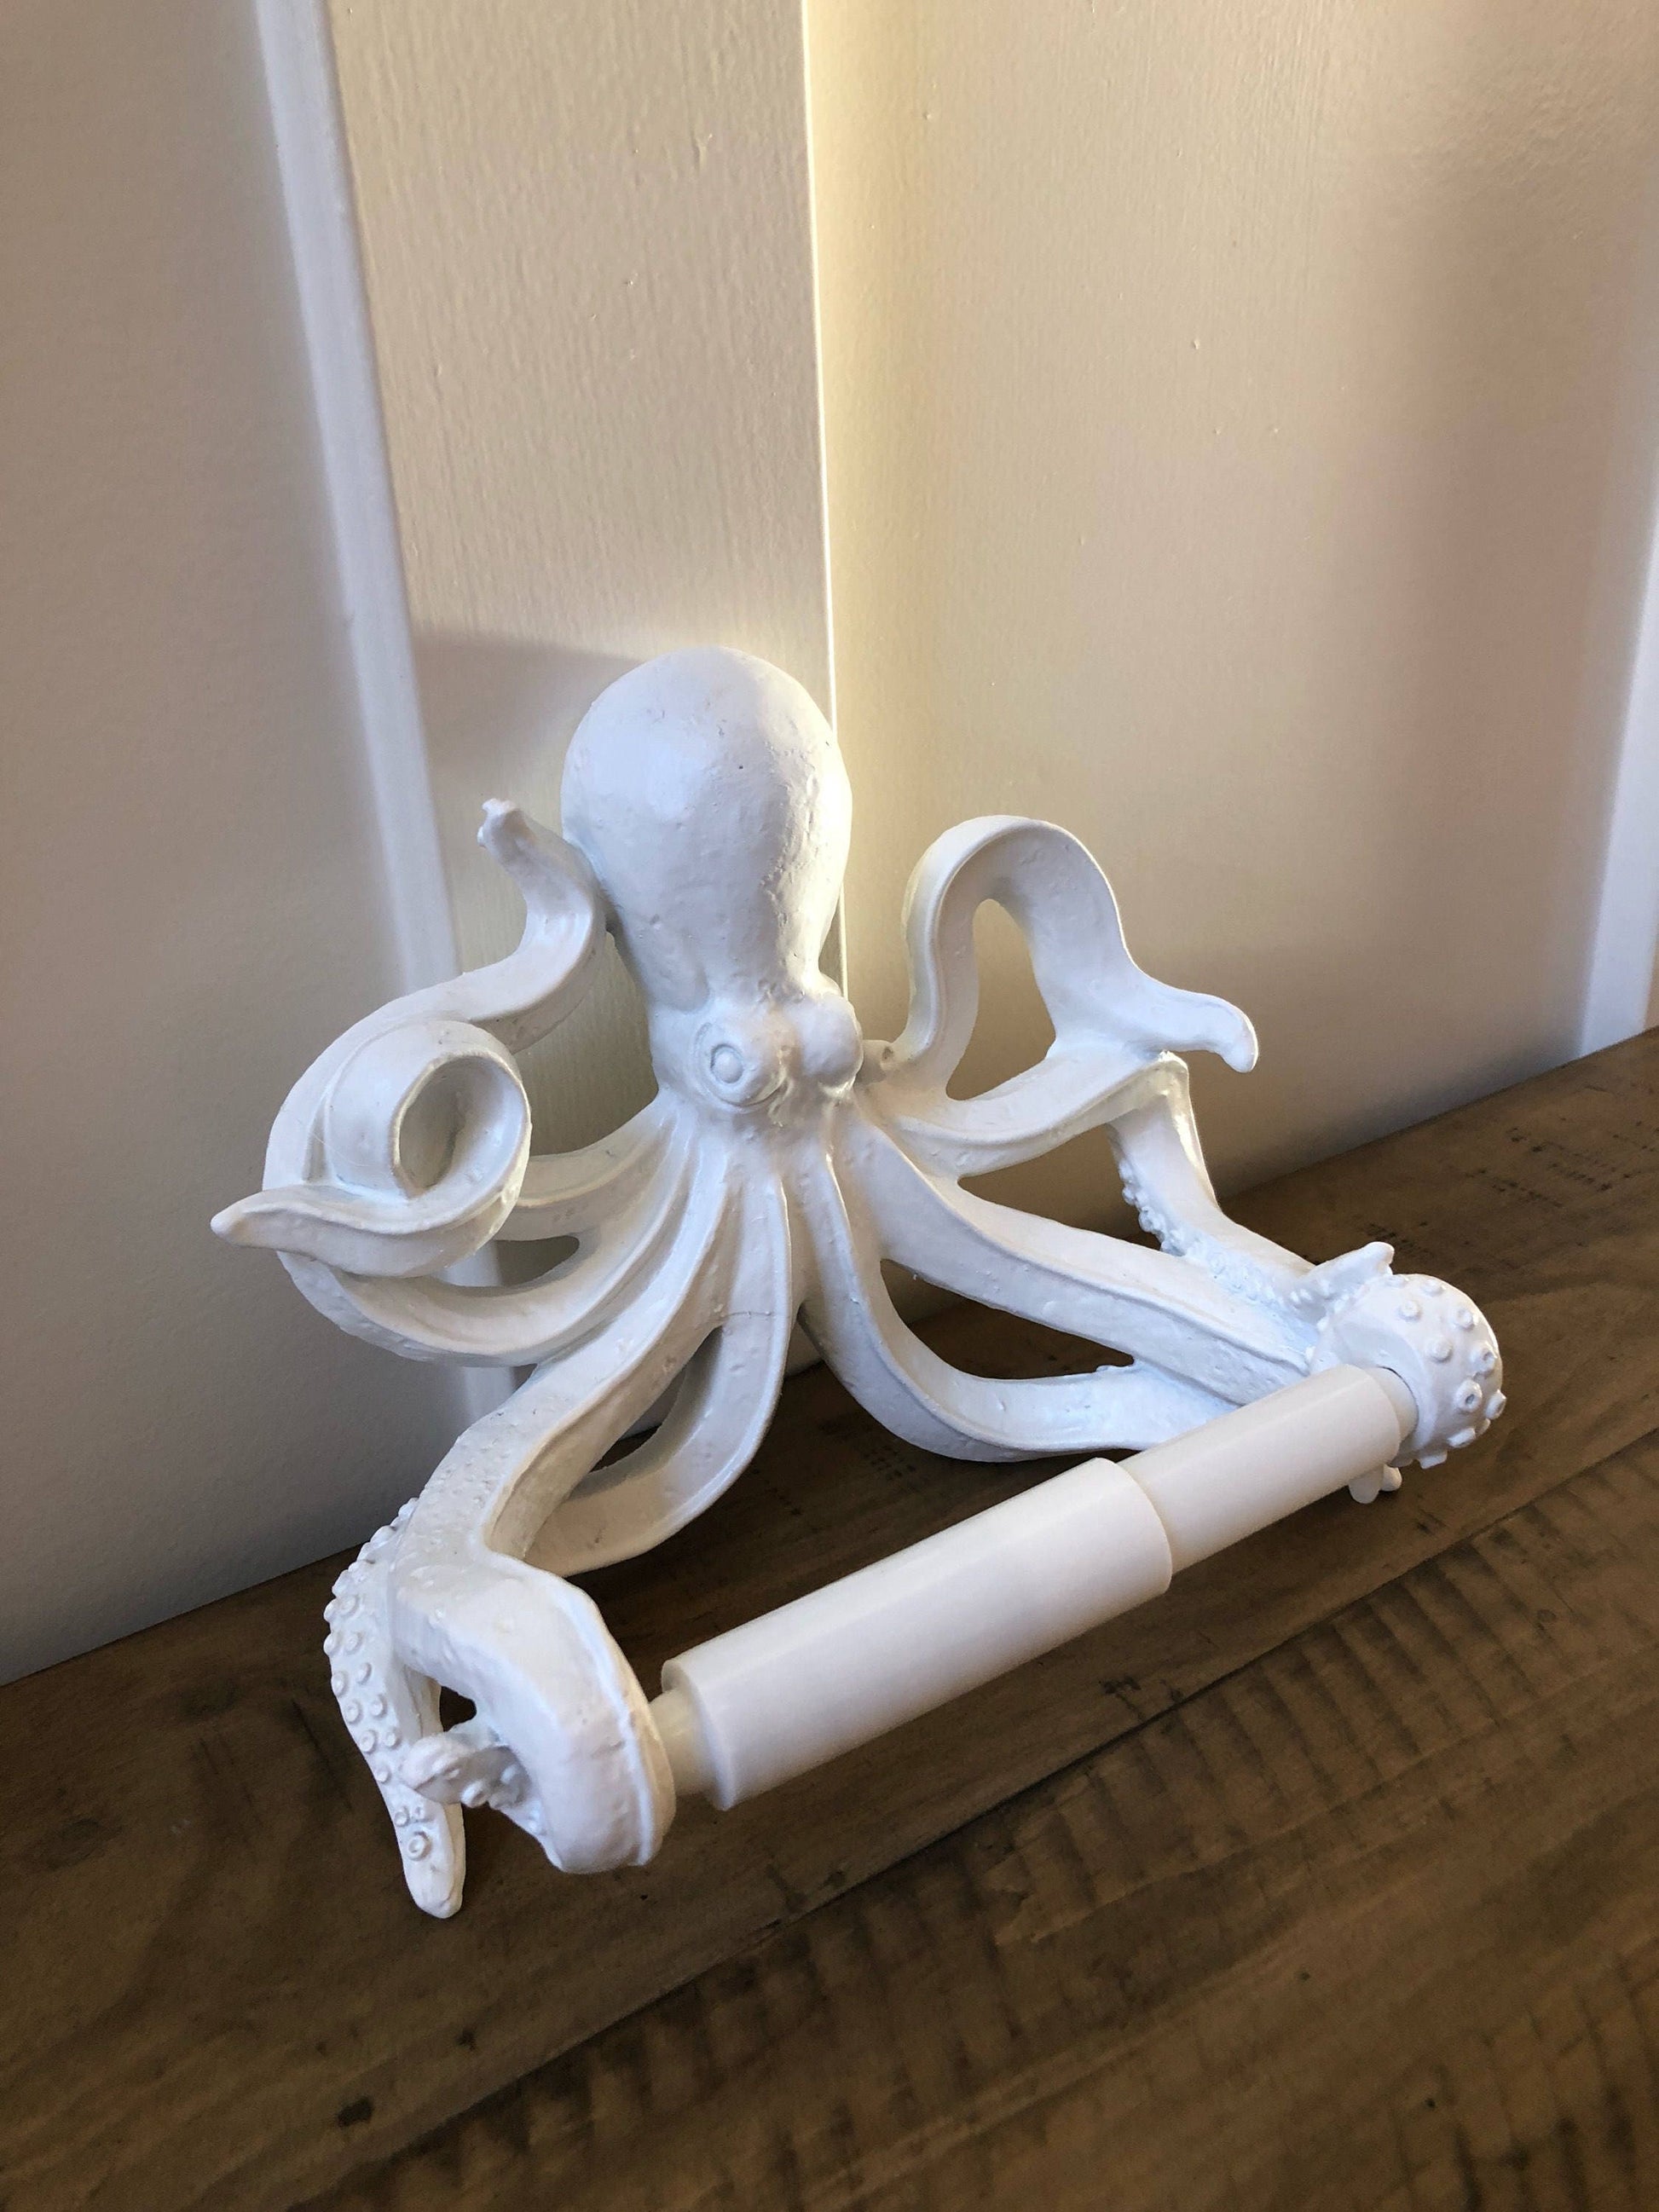 SALE/Coral Octopus Toilet Paper Holder/pOctopus Decor/You pick COLOR/Beach/Nautical decor/Resin Octopus Towel Hook/Kids Bathroom/beach house